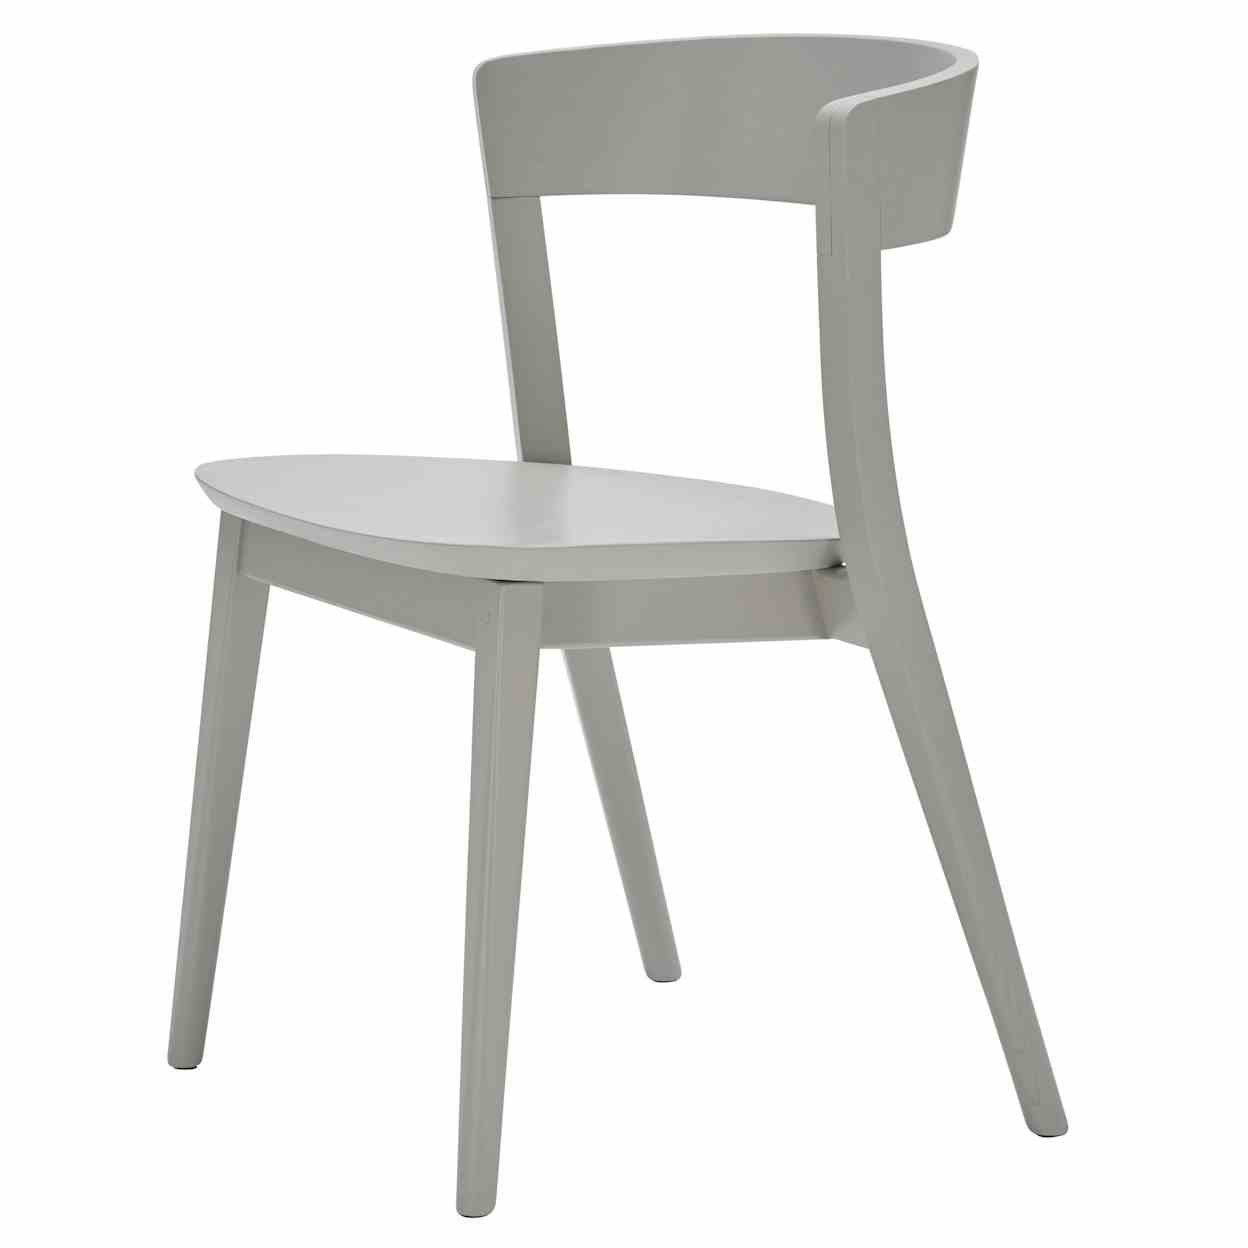 Sp01 design clarke chair grey angle haute living